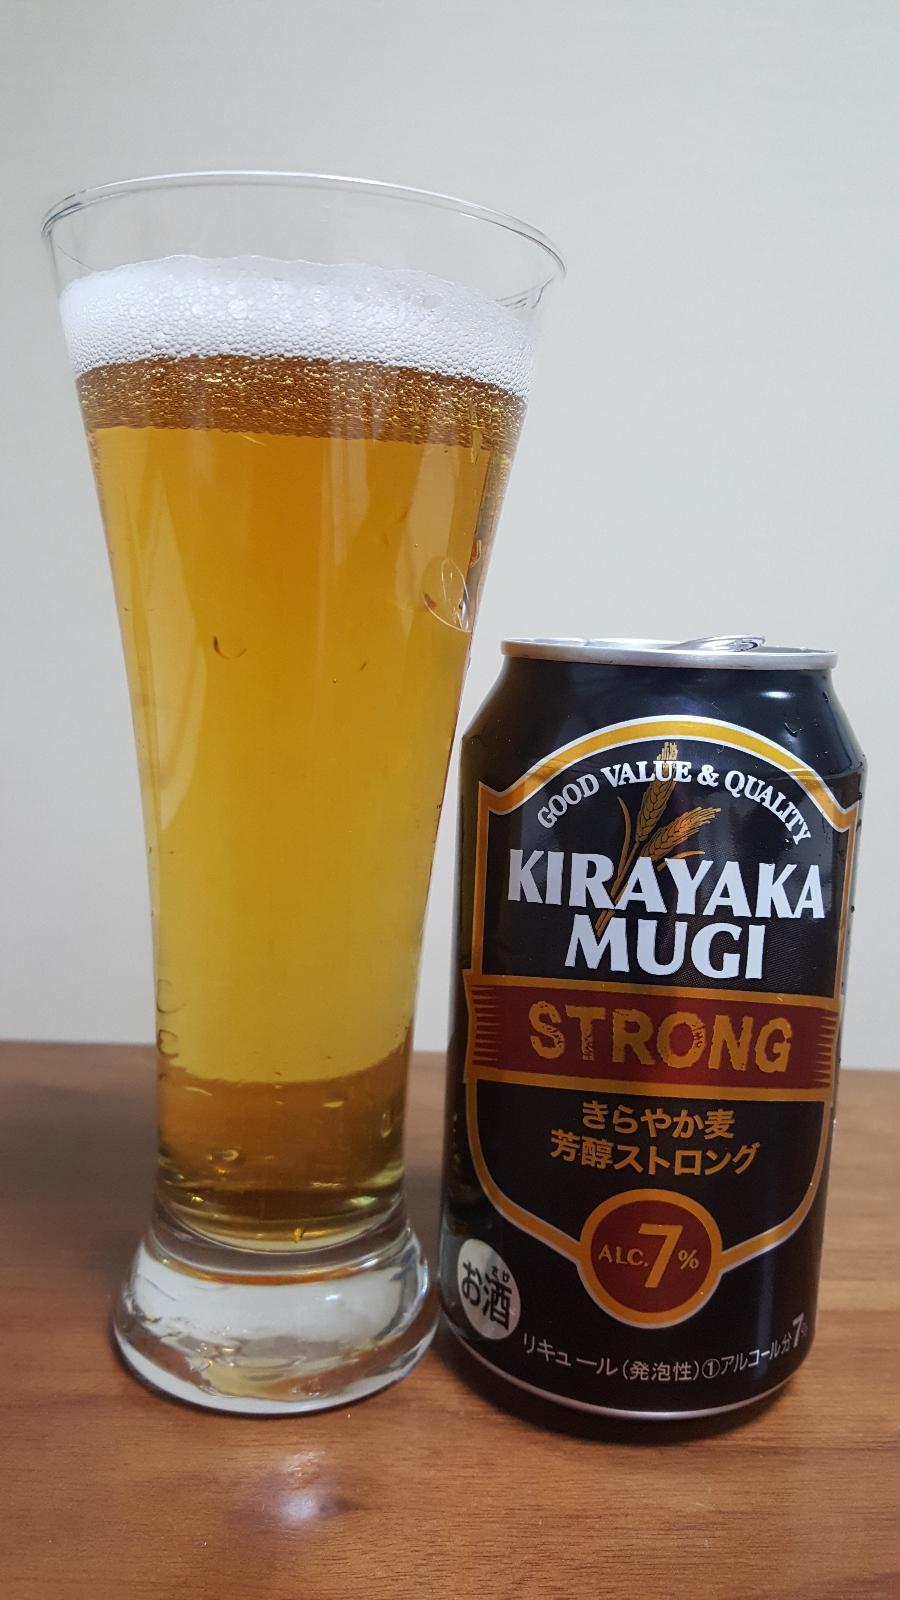 Kirayaka Mugi Strong